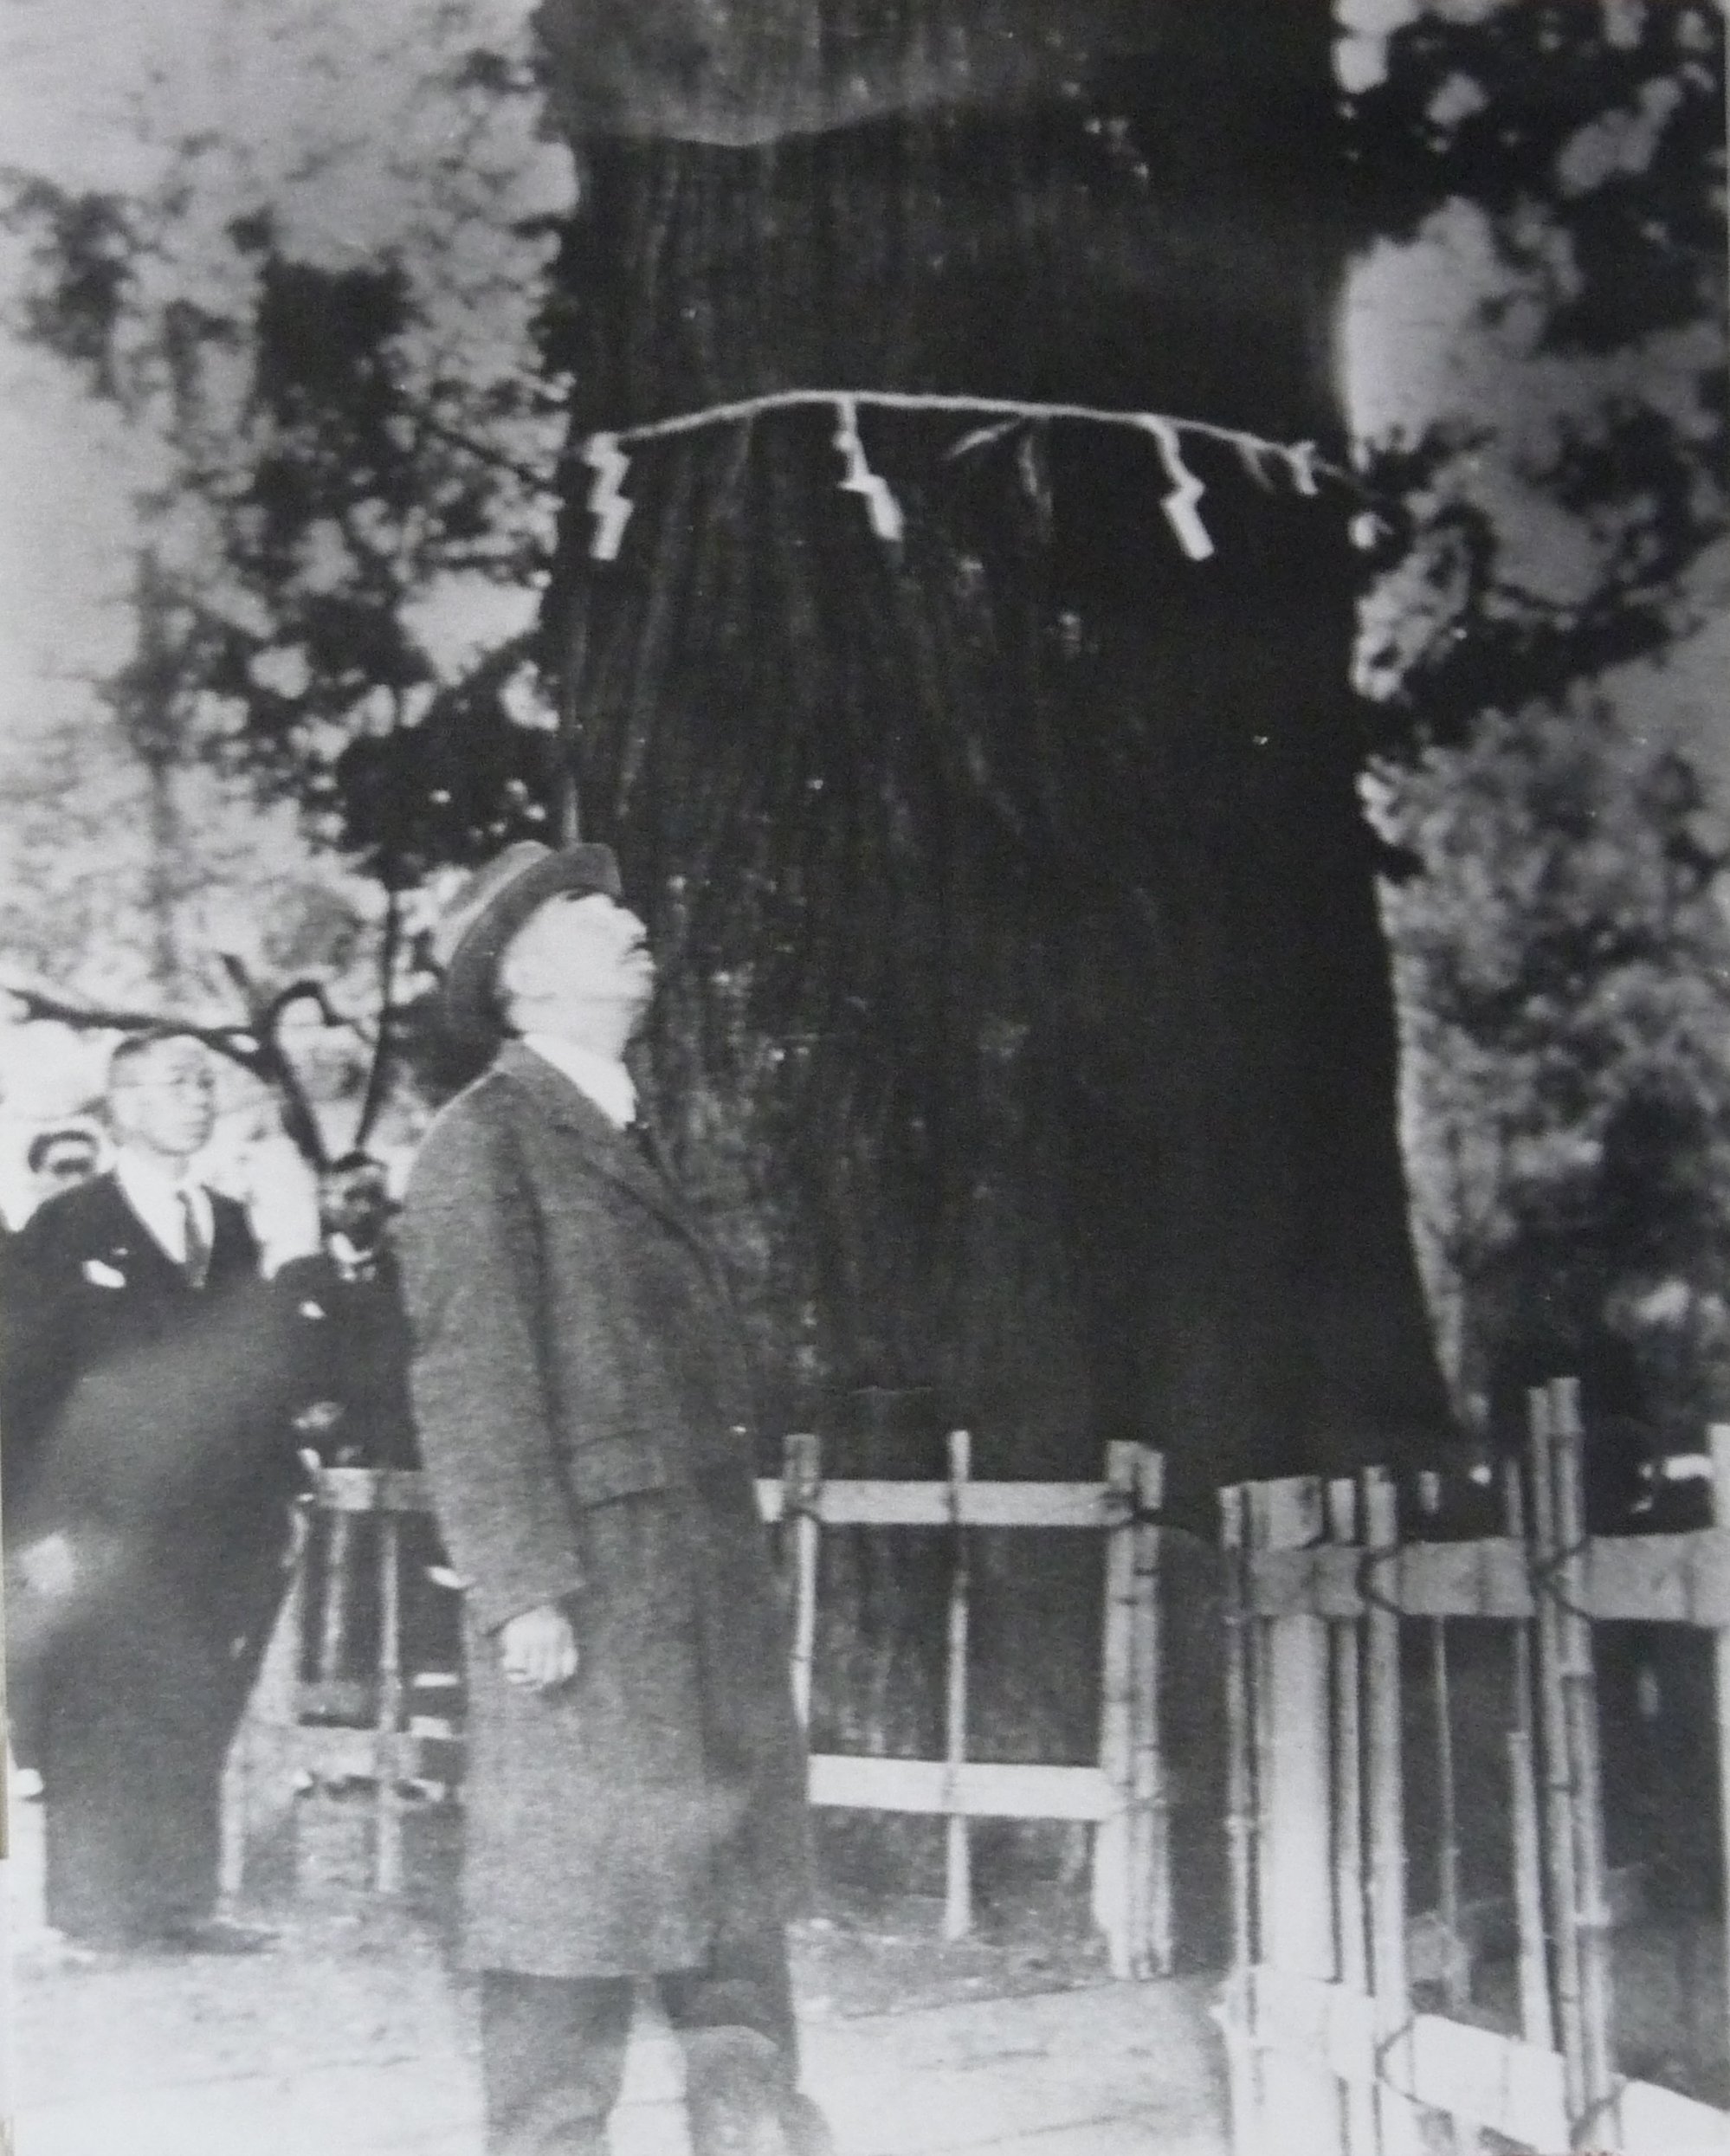 Emperor Showa (Hirohito) gazing at the Cryptomeria tree 'Great sugi of Kayano', Kaga, Ishikawa, Japan, 27 Oct 1947